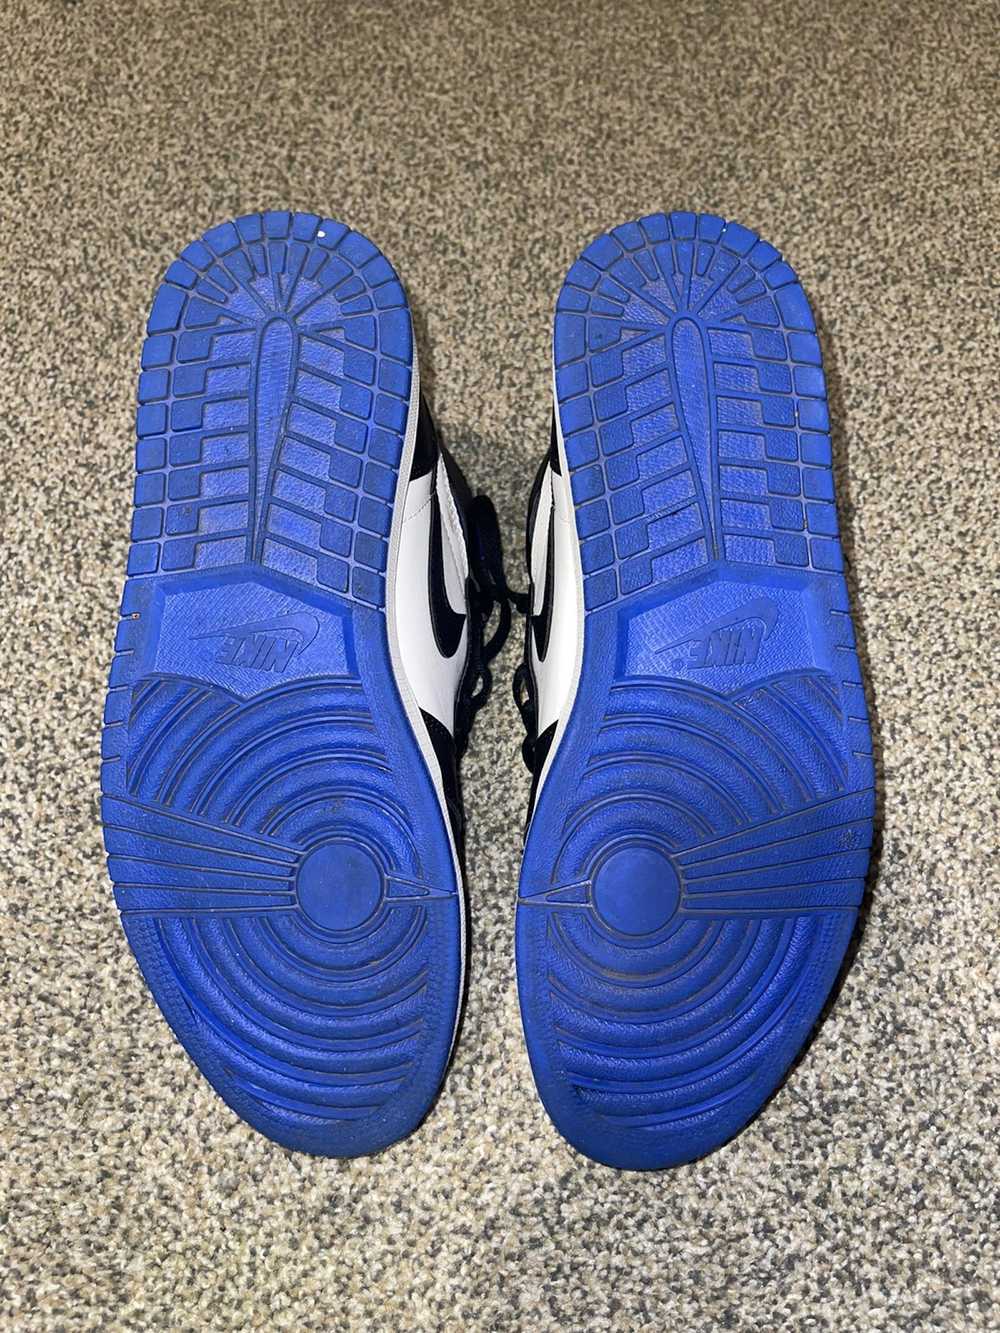 Jordan Brand × Nike Jordan Retro 1 ‘Royal Toe’ - image 6